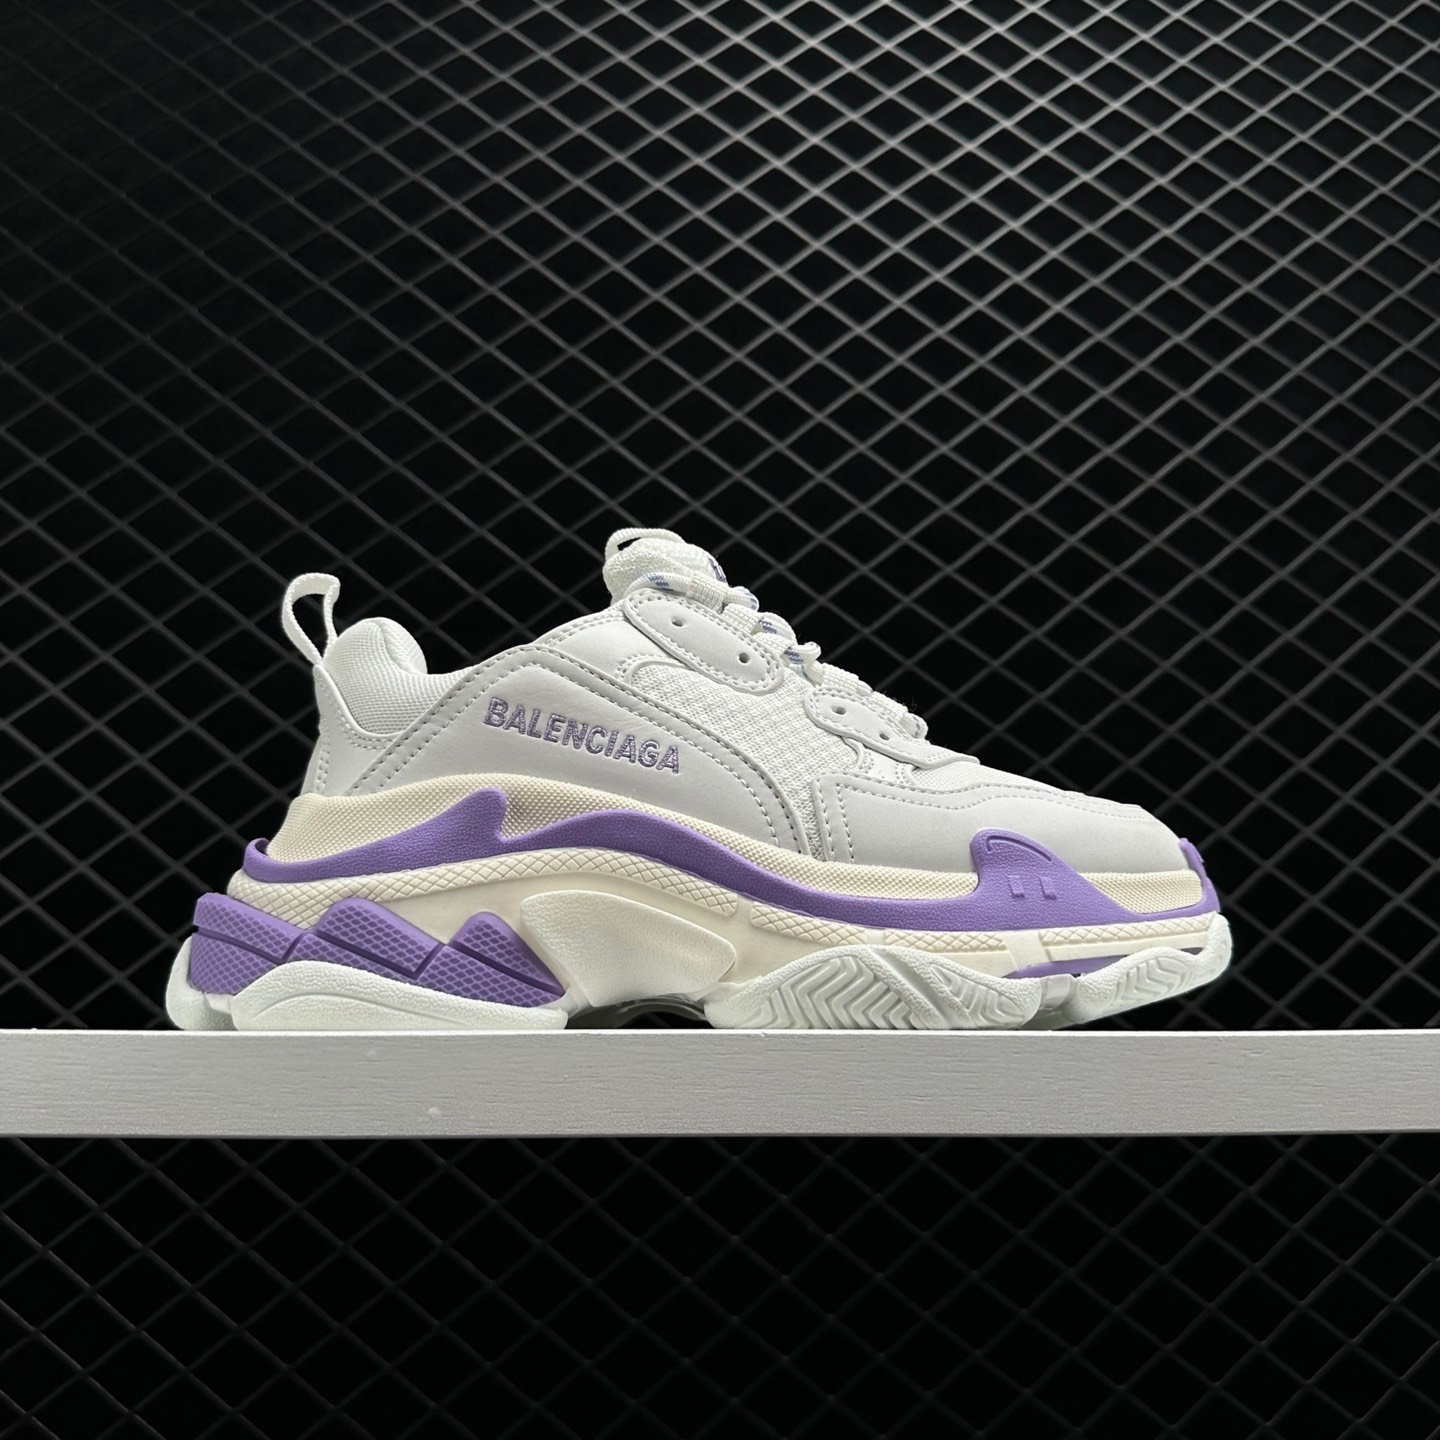 Balenciaga White Purple Triple S - Iconic Chunky Sneakers for Fashion Forward Individuals